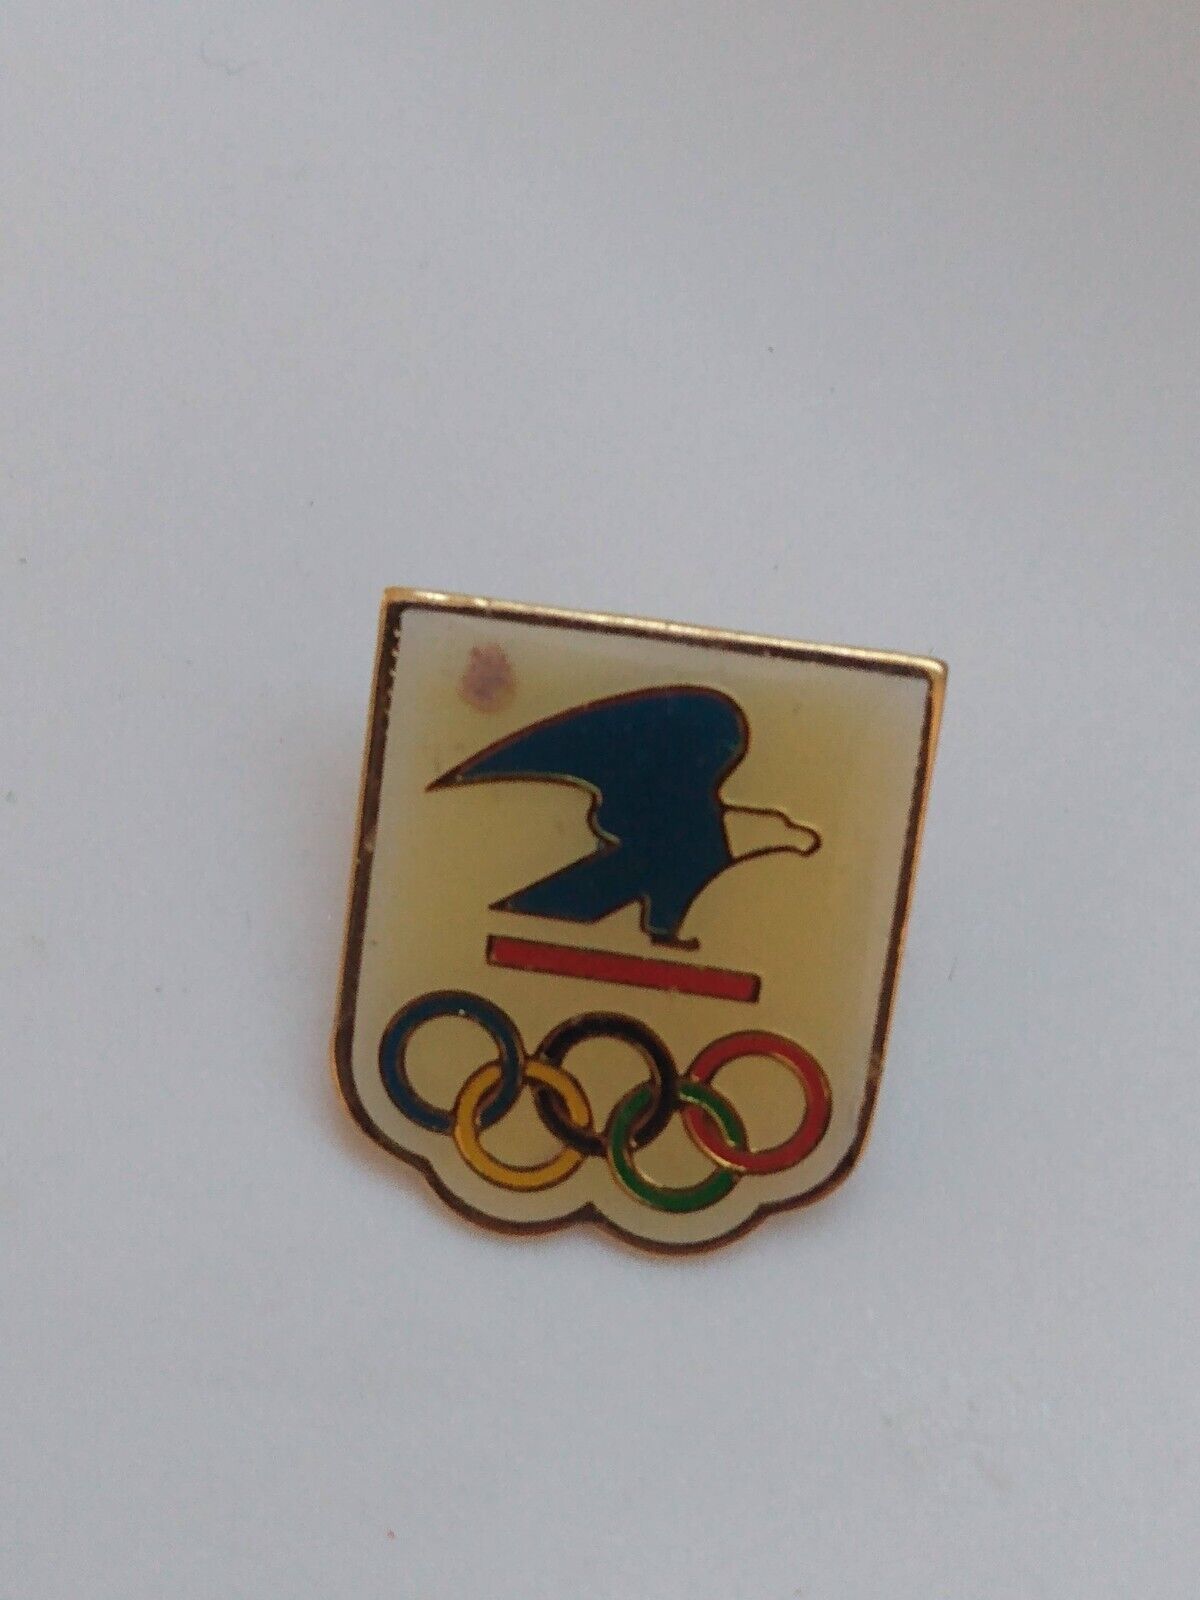 USPS Olympics Lapel Pin